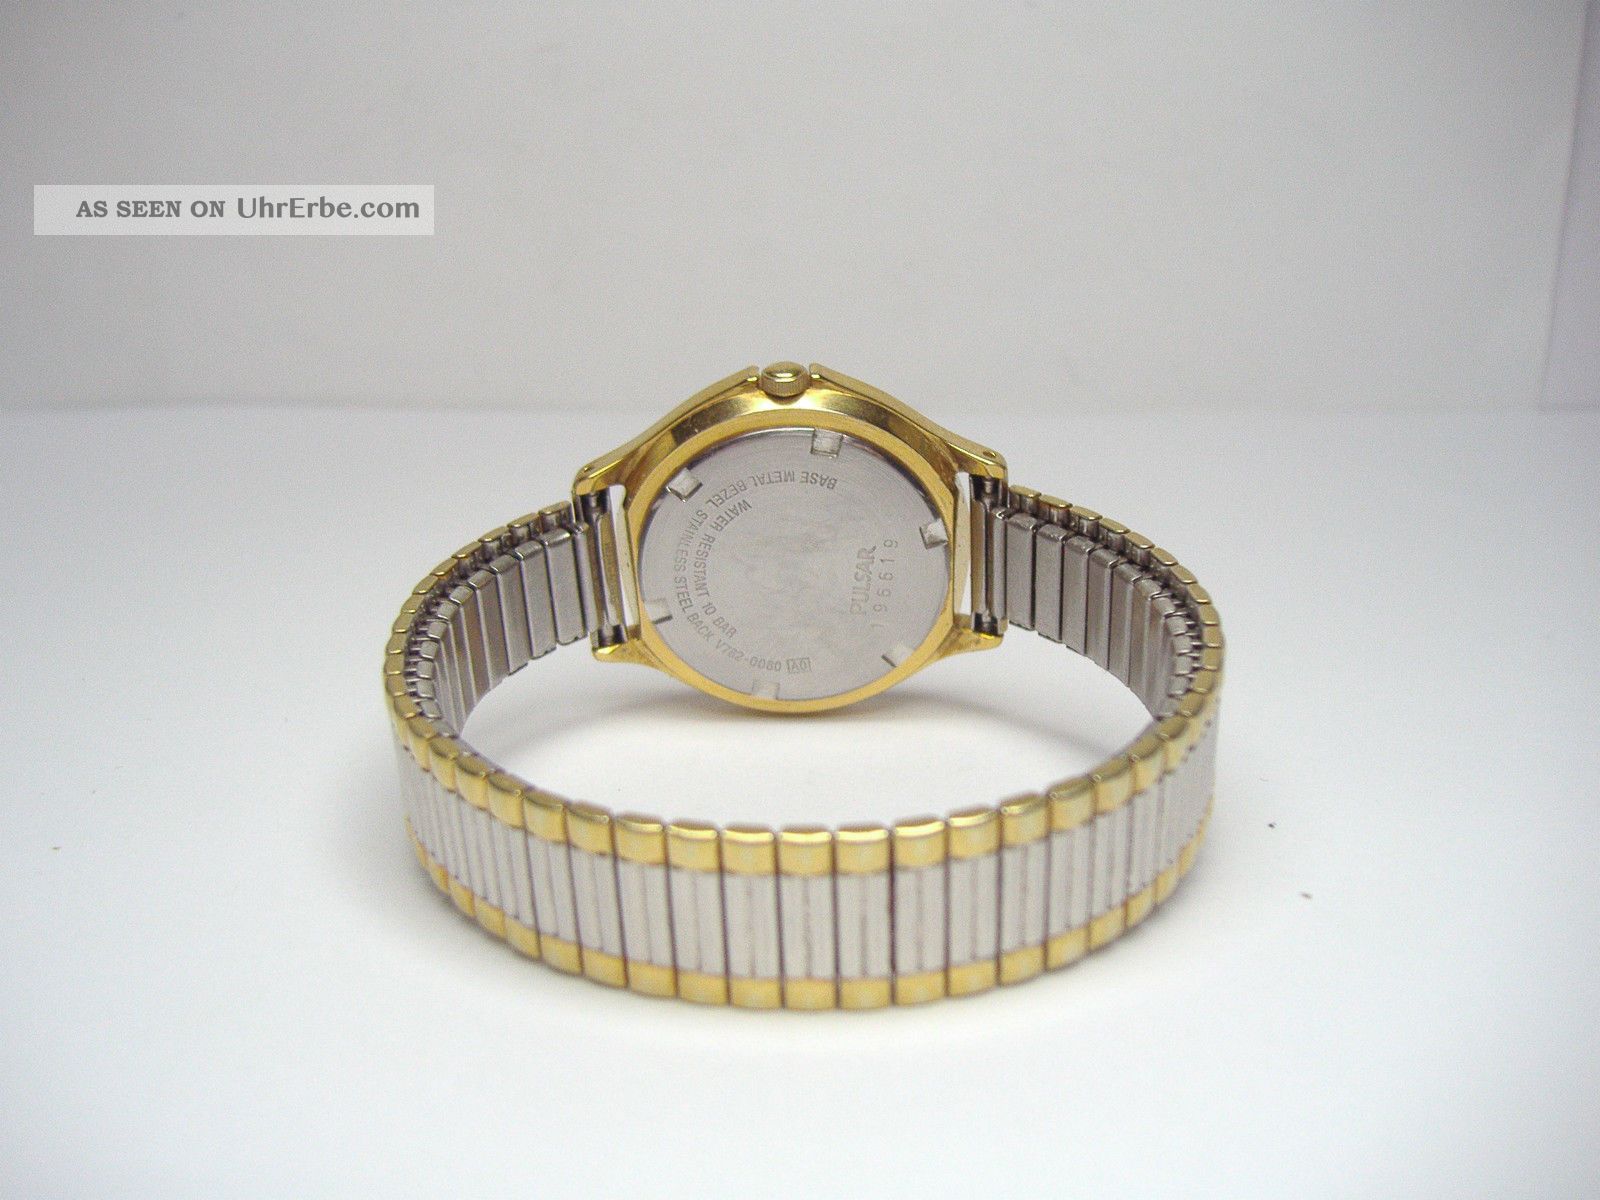 Pulsar By Seiko Bicolor Damenuhr Mit Datum & Flex - Armband Wr 100 Quartz